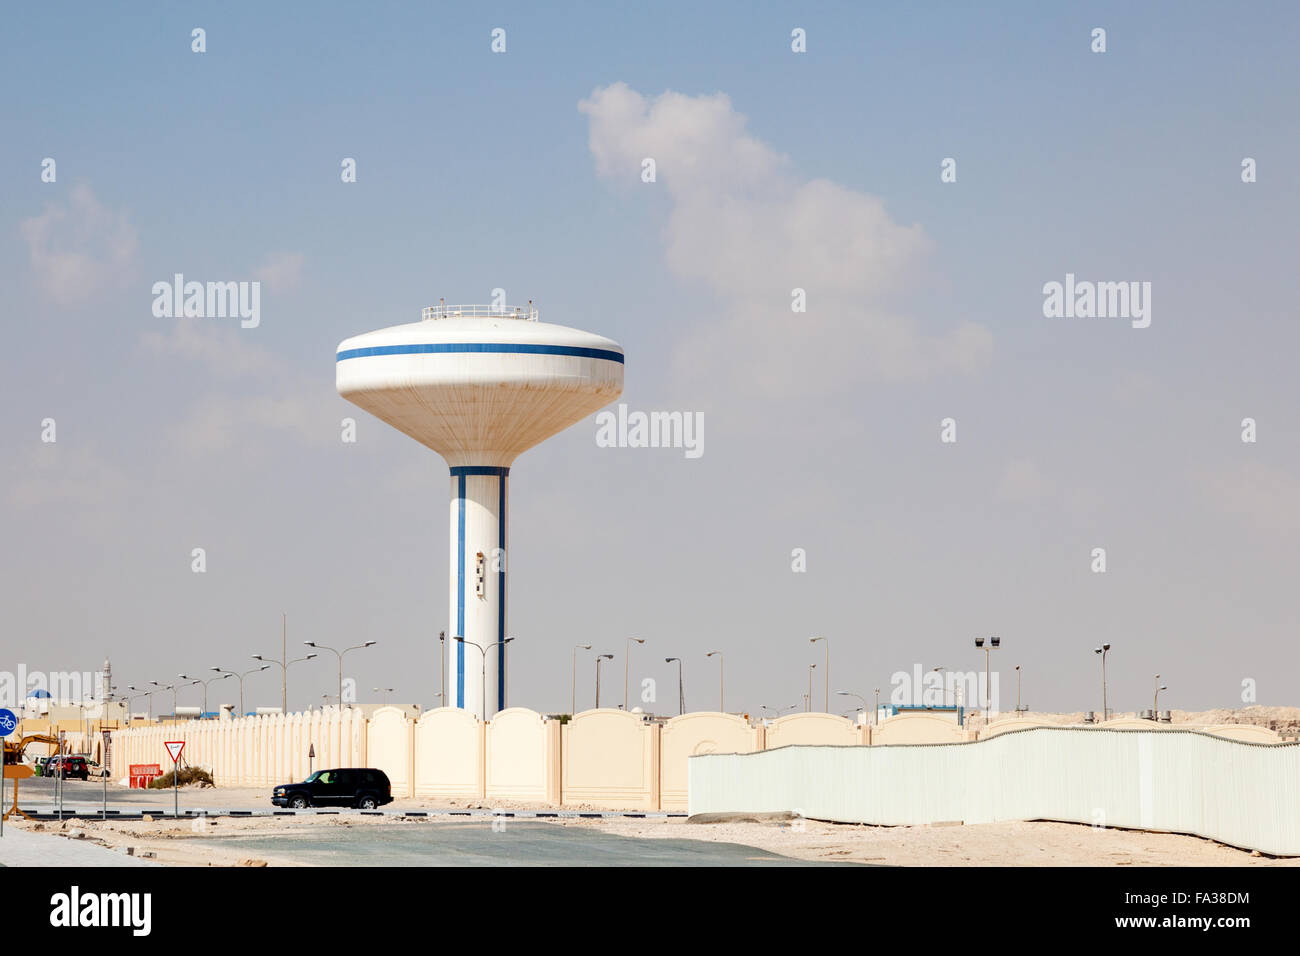 Water tower in Doha, Qatar Stock Photo